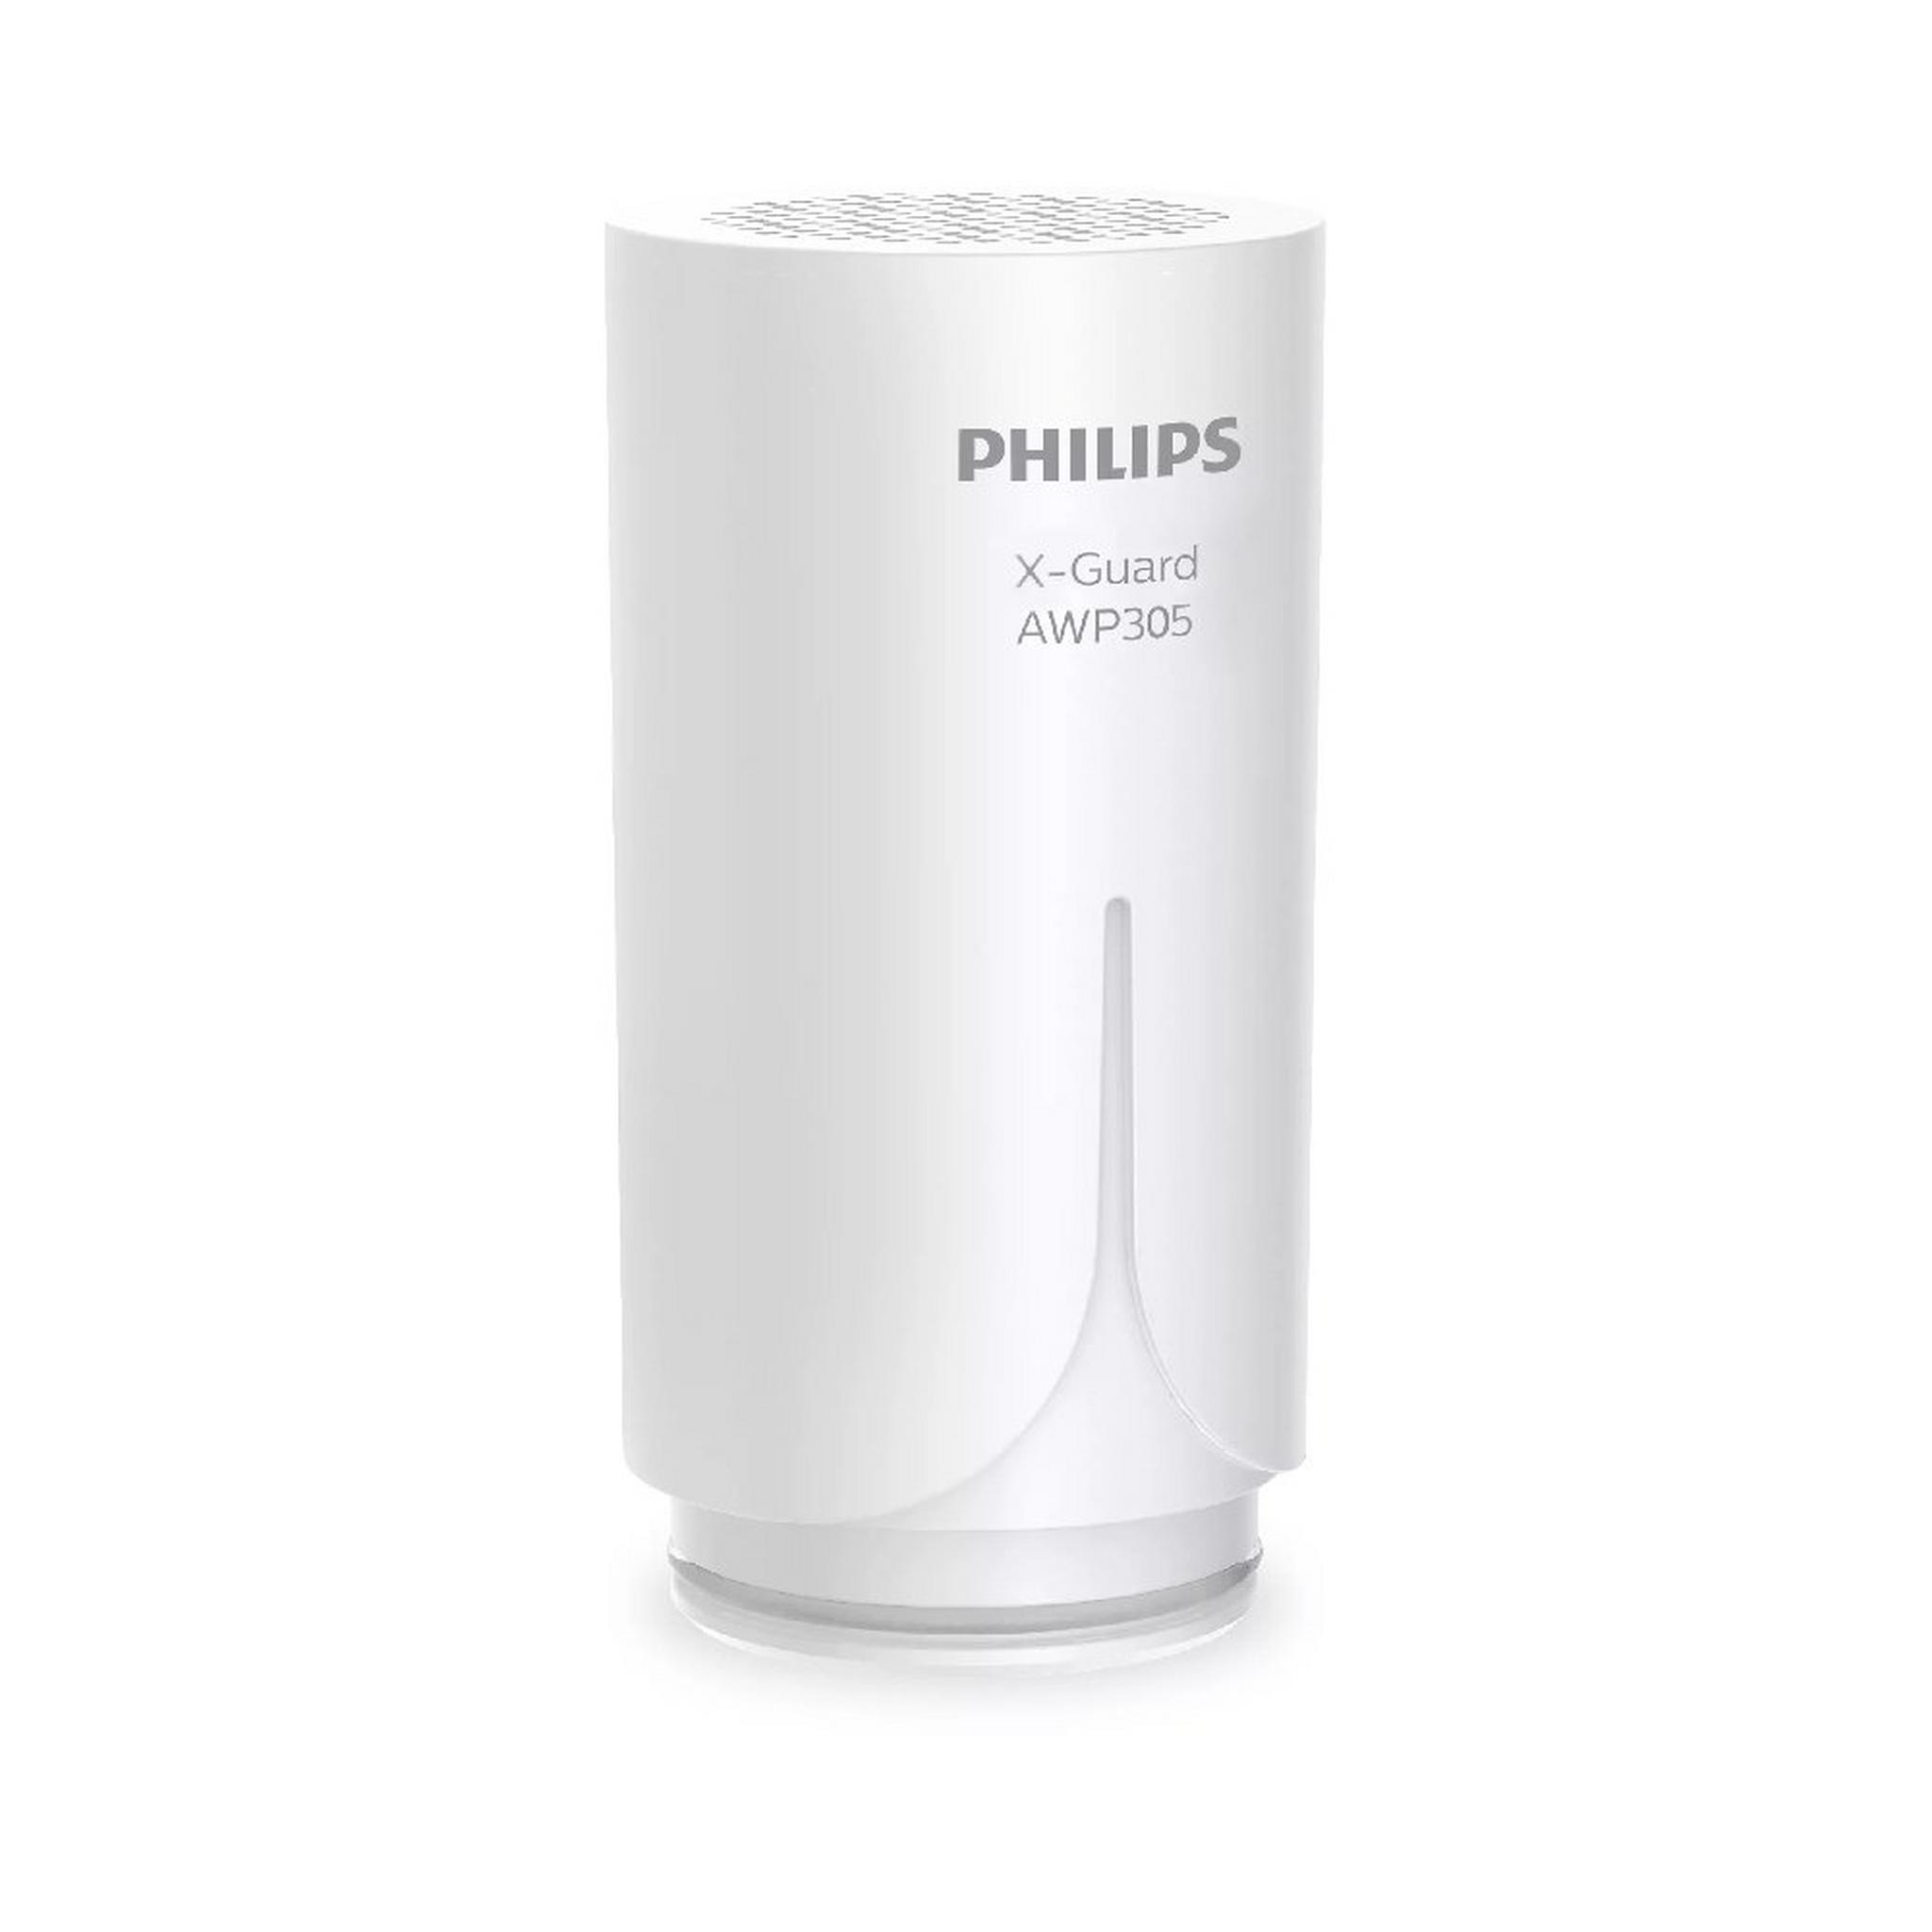 PHILIPS On-Tap Filter cartridge, 1000 Liters, AWP305 - White